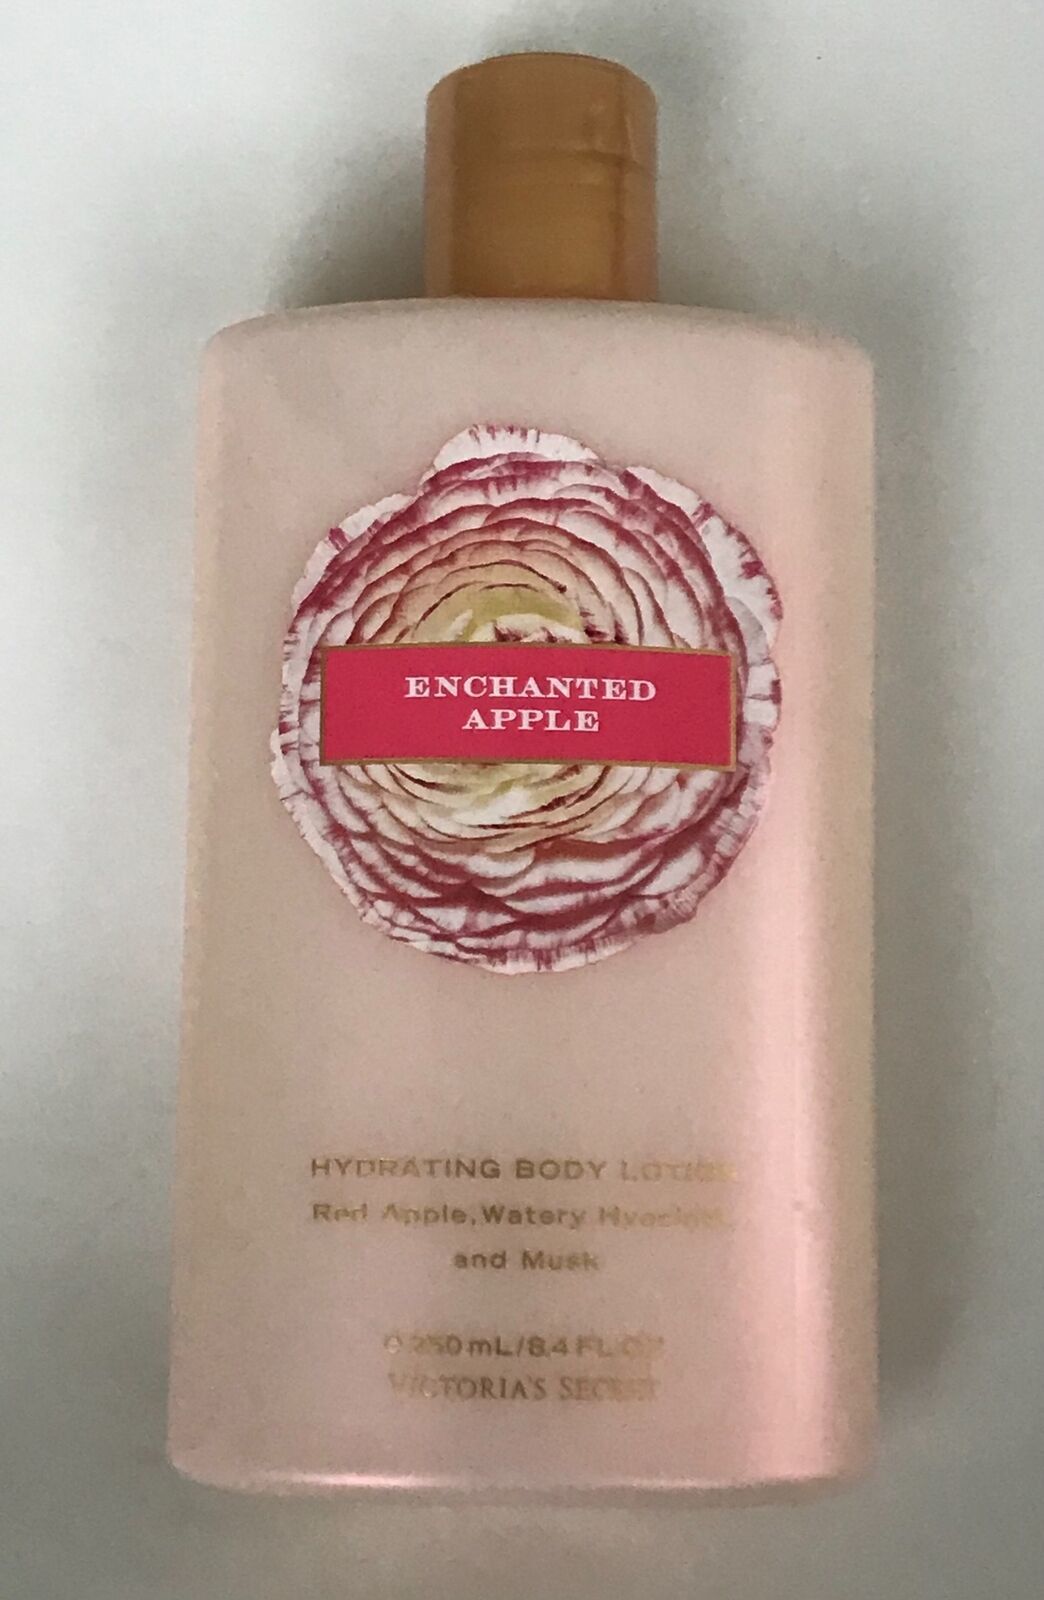 NEW Victoria’s Secret Secret Enchanted Apple Hydrating Body Lotion (8.4 fl. oz.) - $49.95